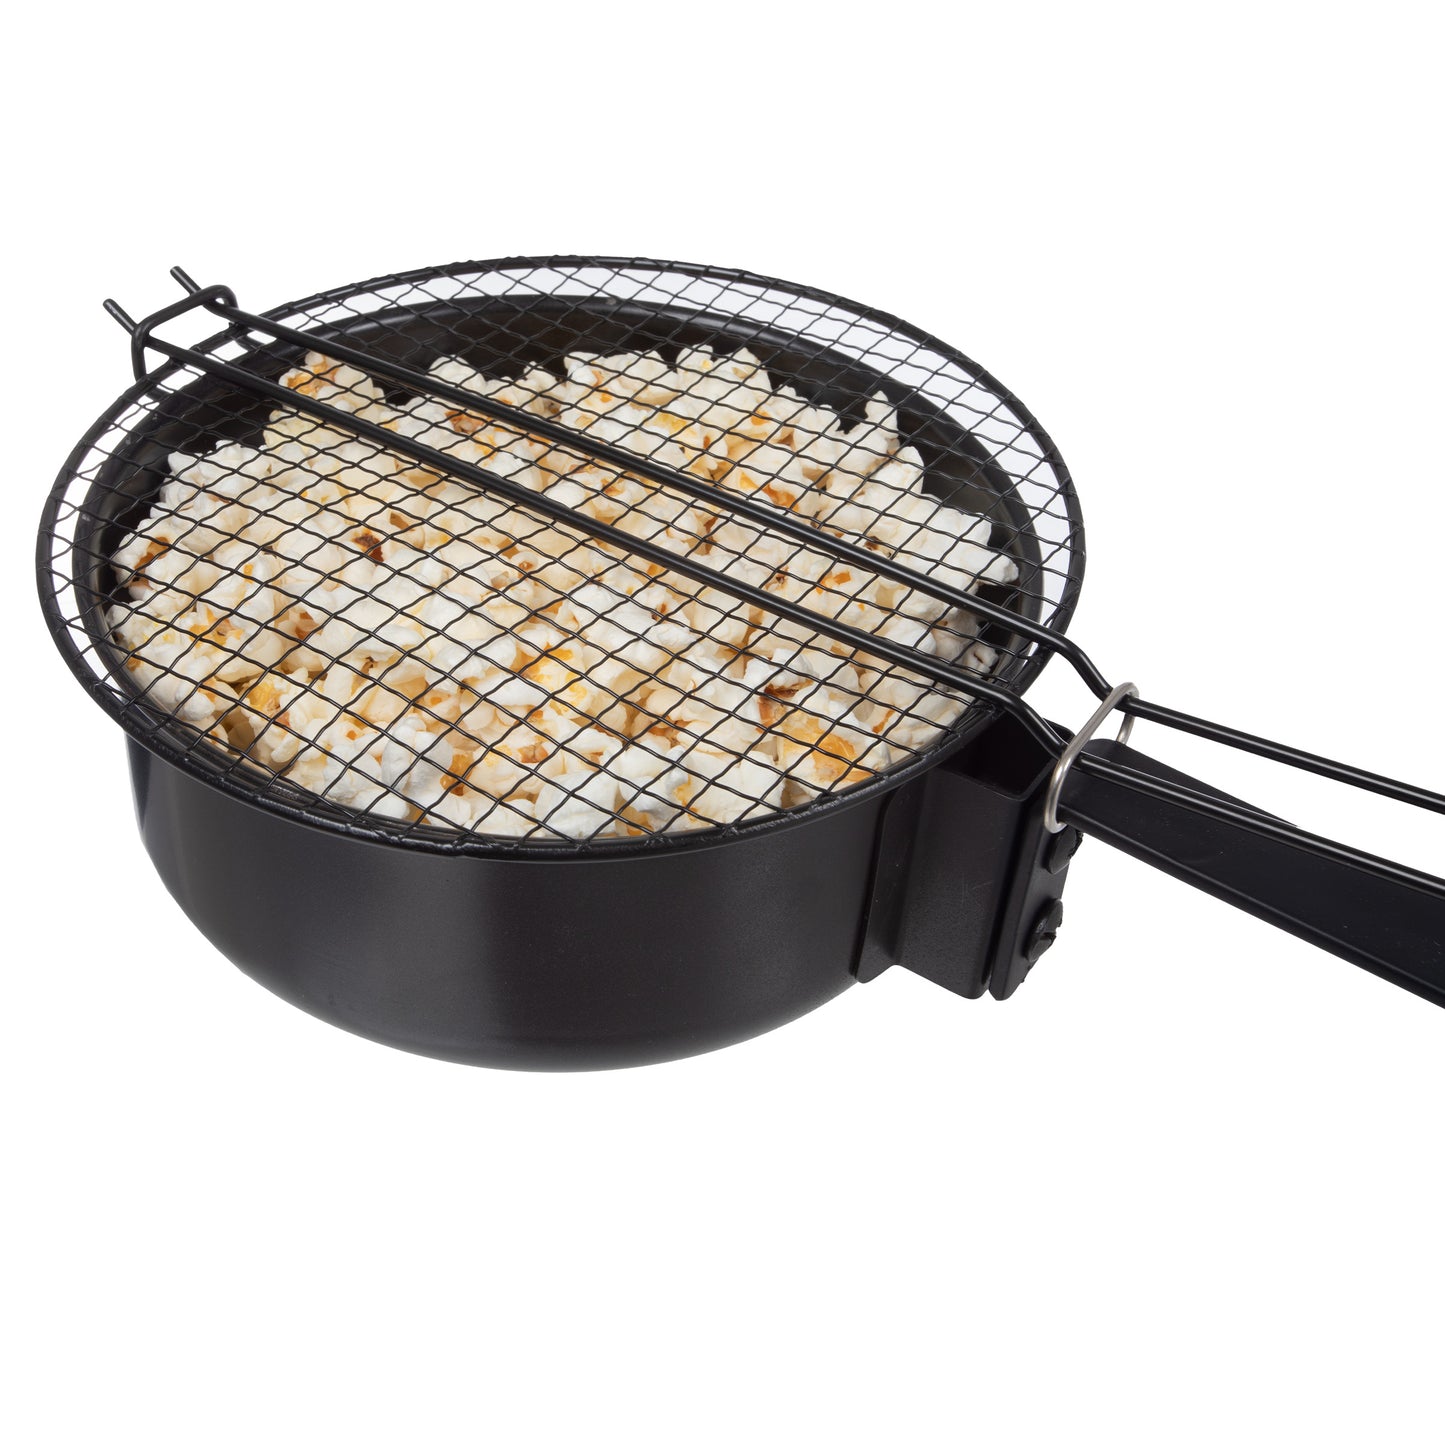 Metal Pot Campfire Popcorn Popper - Black